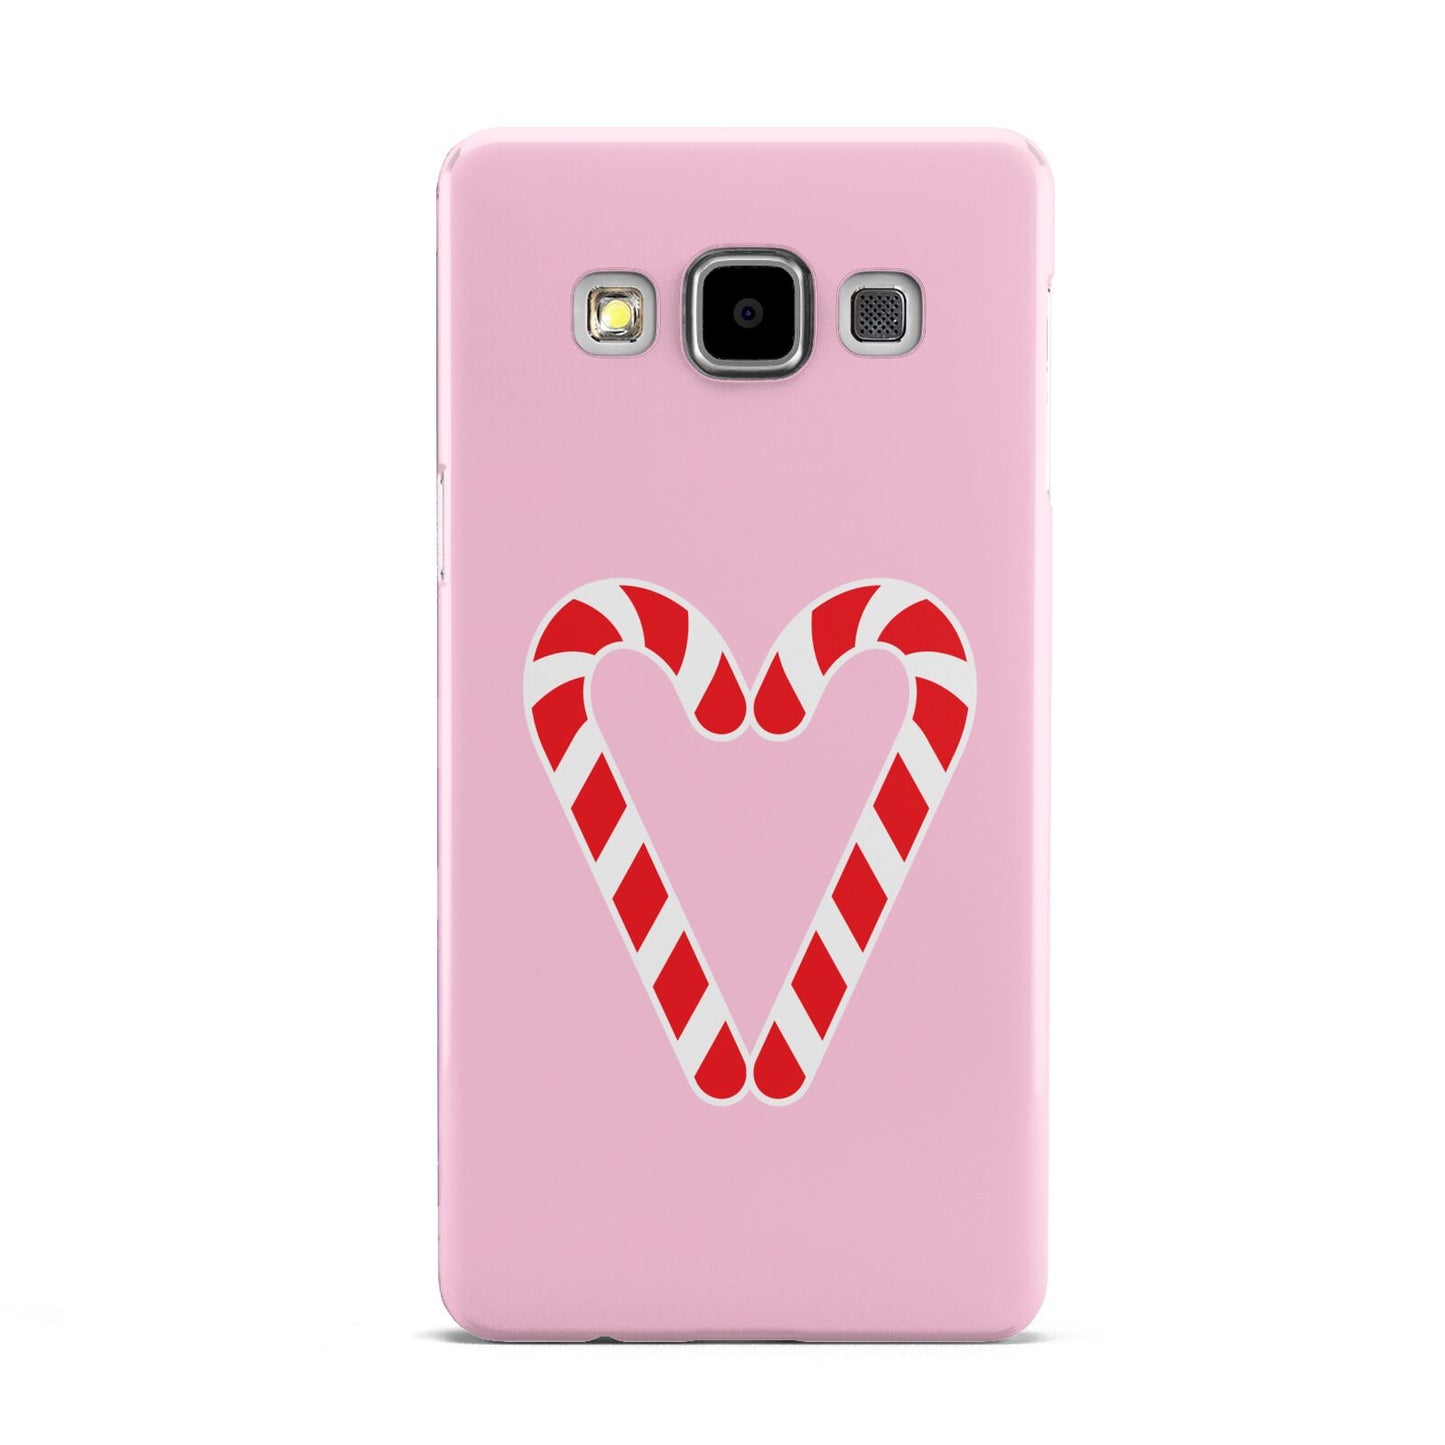 Candy Cane Heart Samsung Galaxy A5 Case